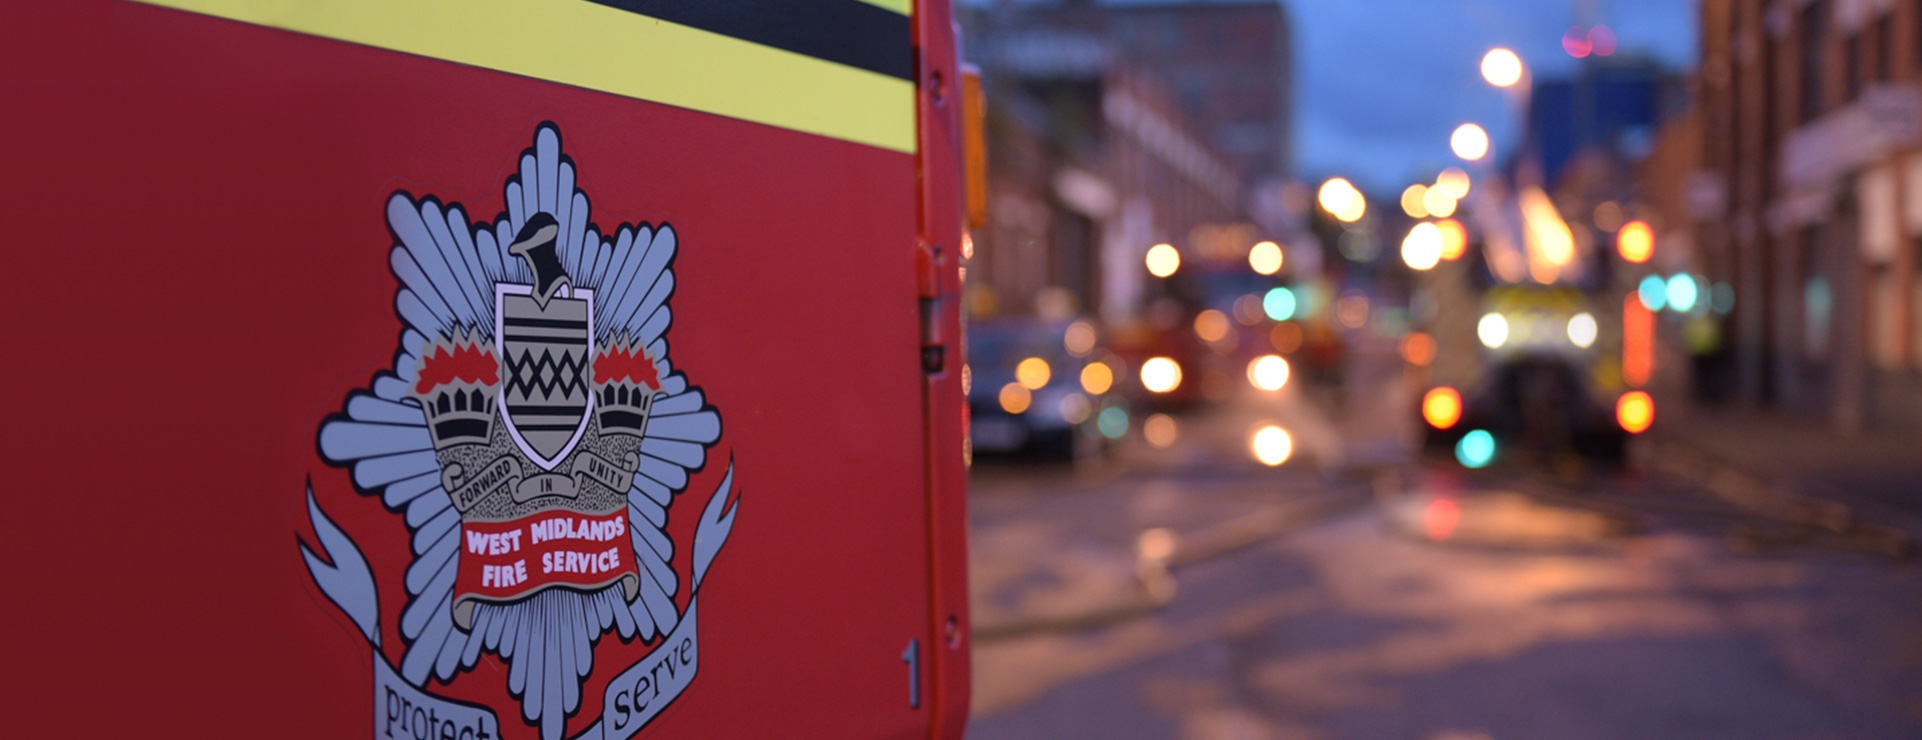 West Midlands Fire Service case study